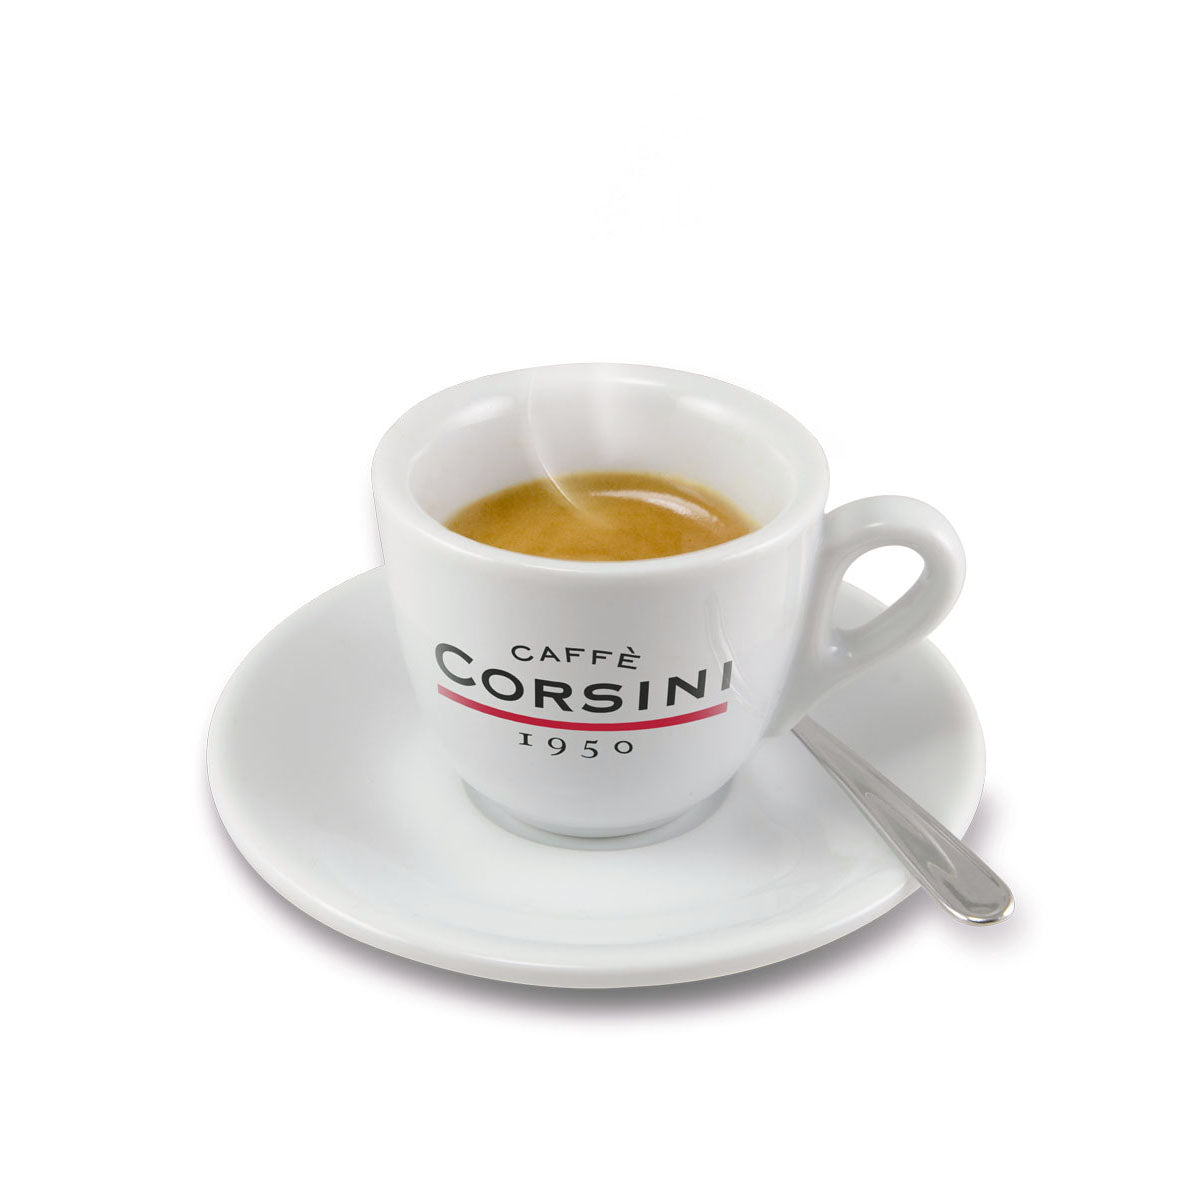 Caffè Corsini coffee cup